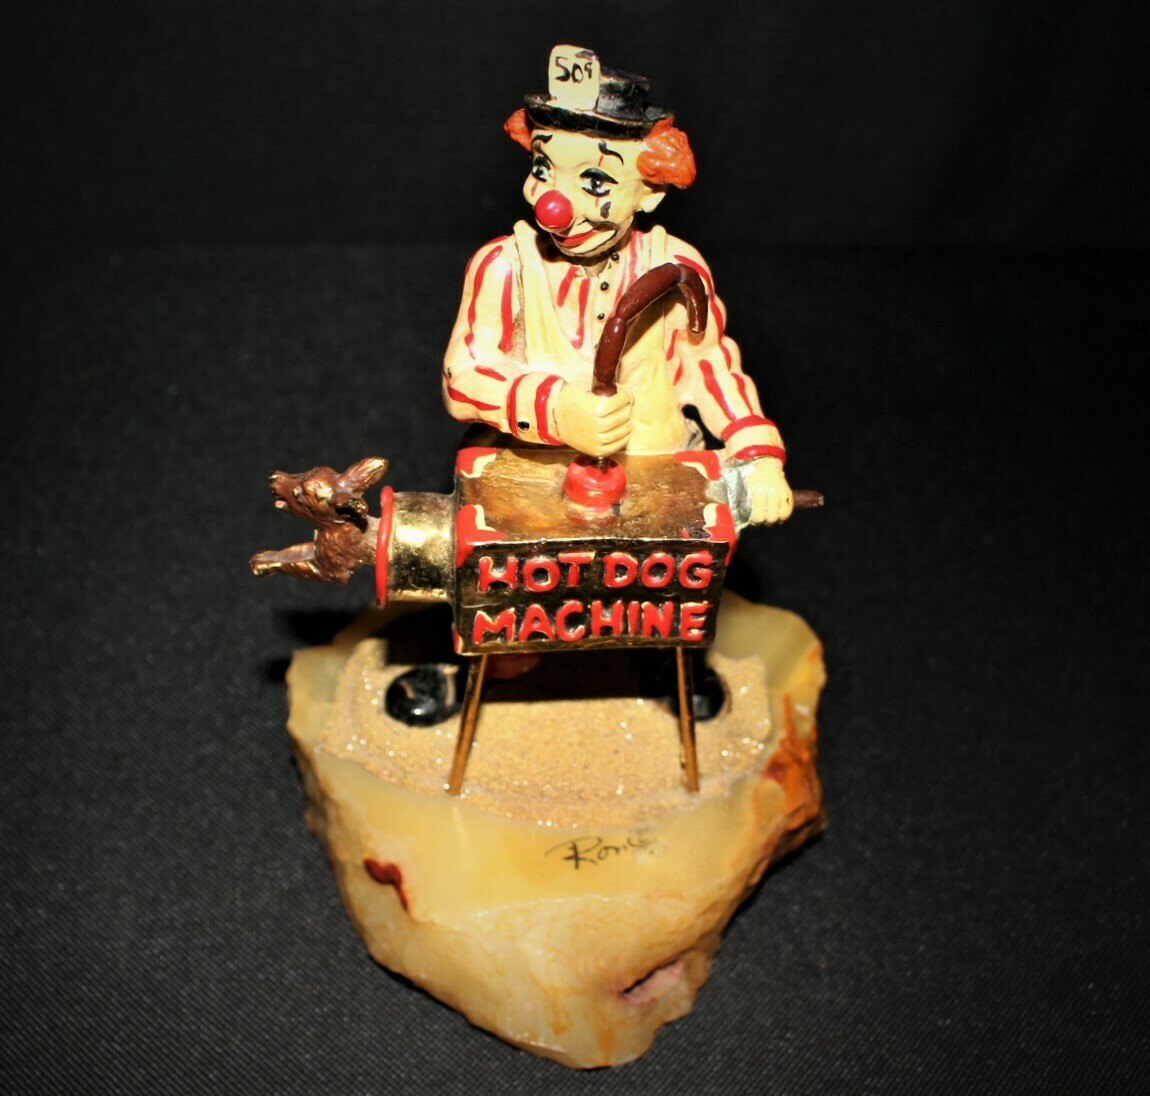 1980 Ron Lee Hot Dog Machine Hand Painted 24kt. Clown Sculpture Figurine, Signed